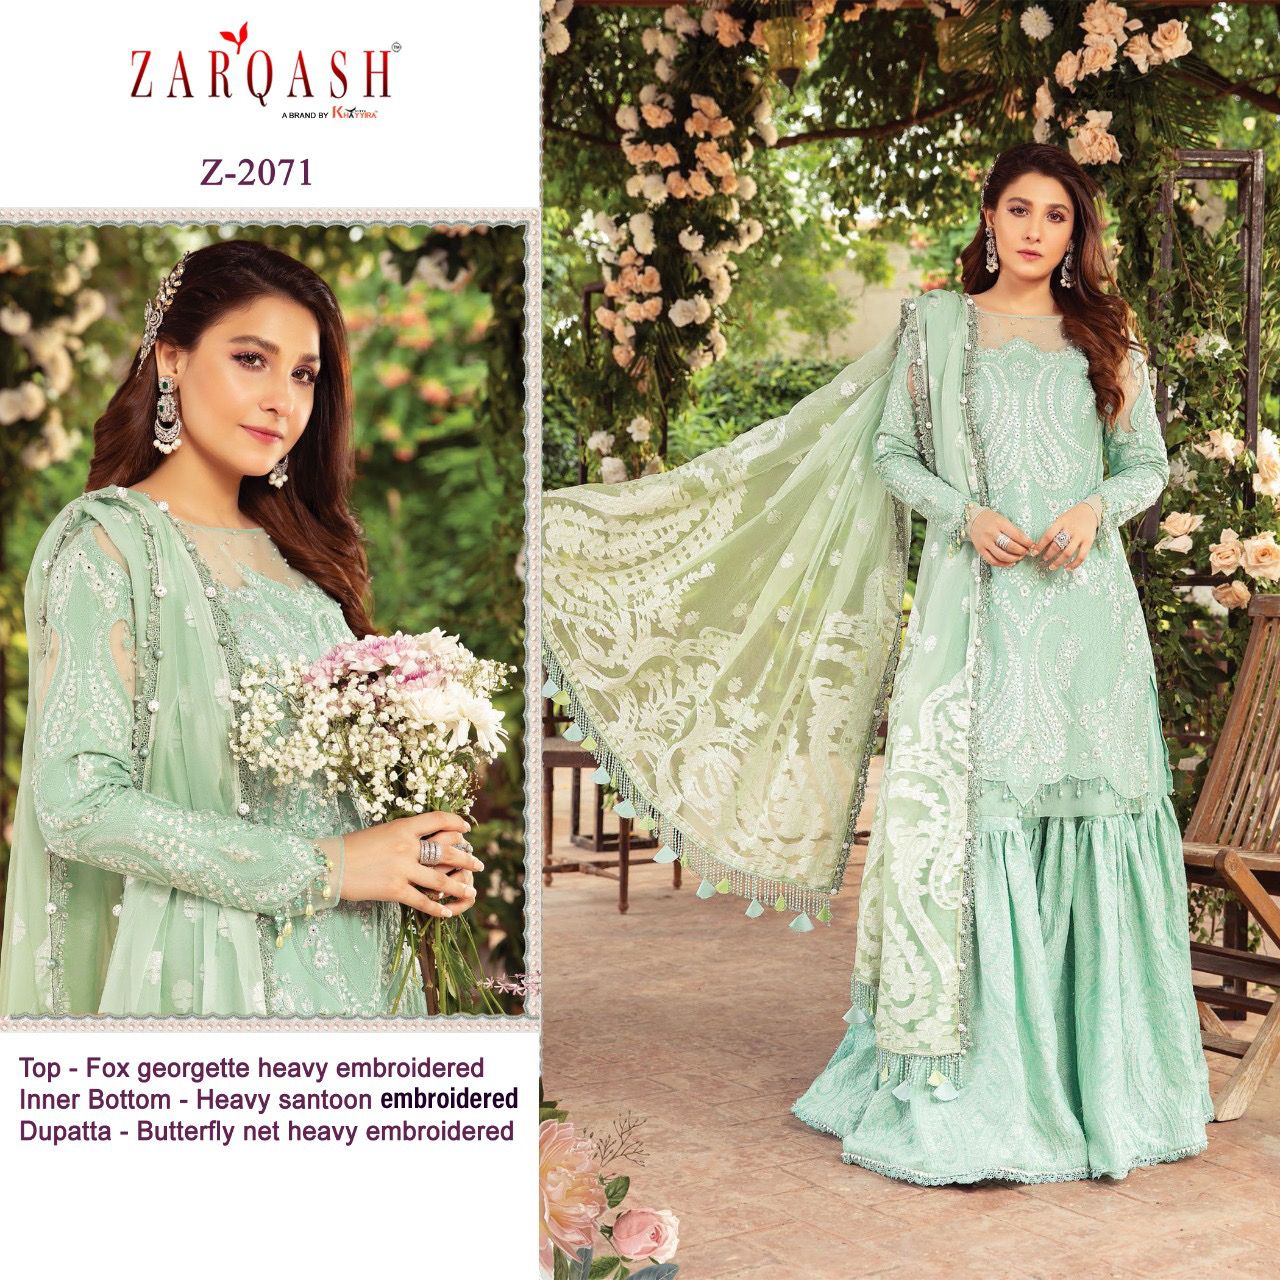 Zarqash Sateen Maria B Fox Georgette Pakistani Suits Catalog